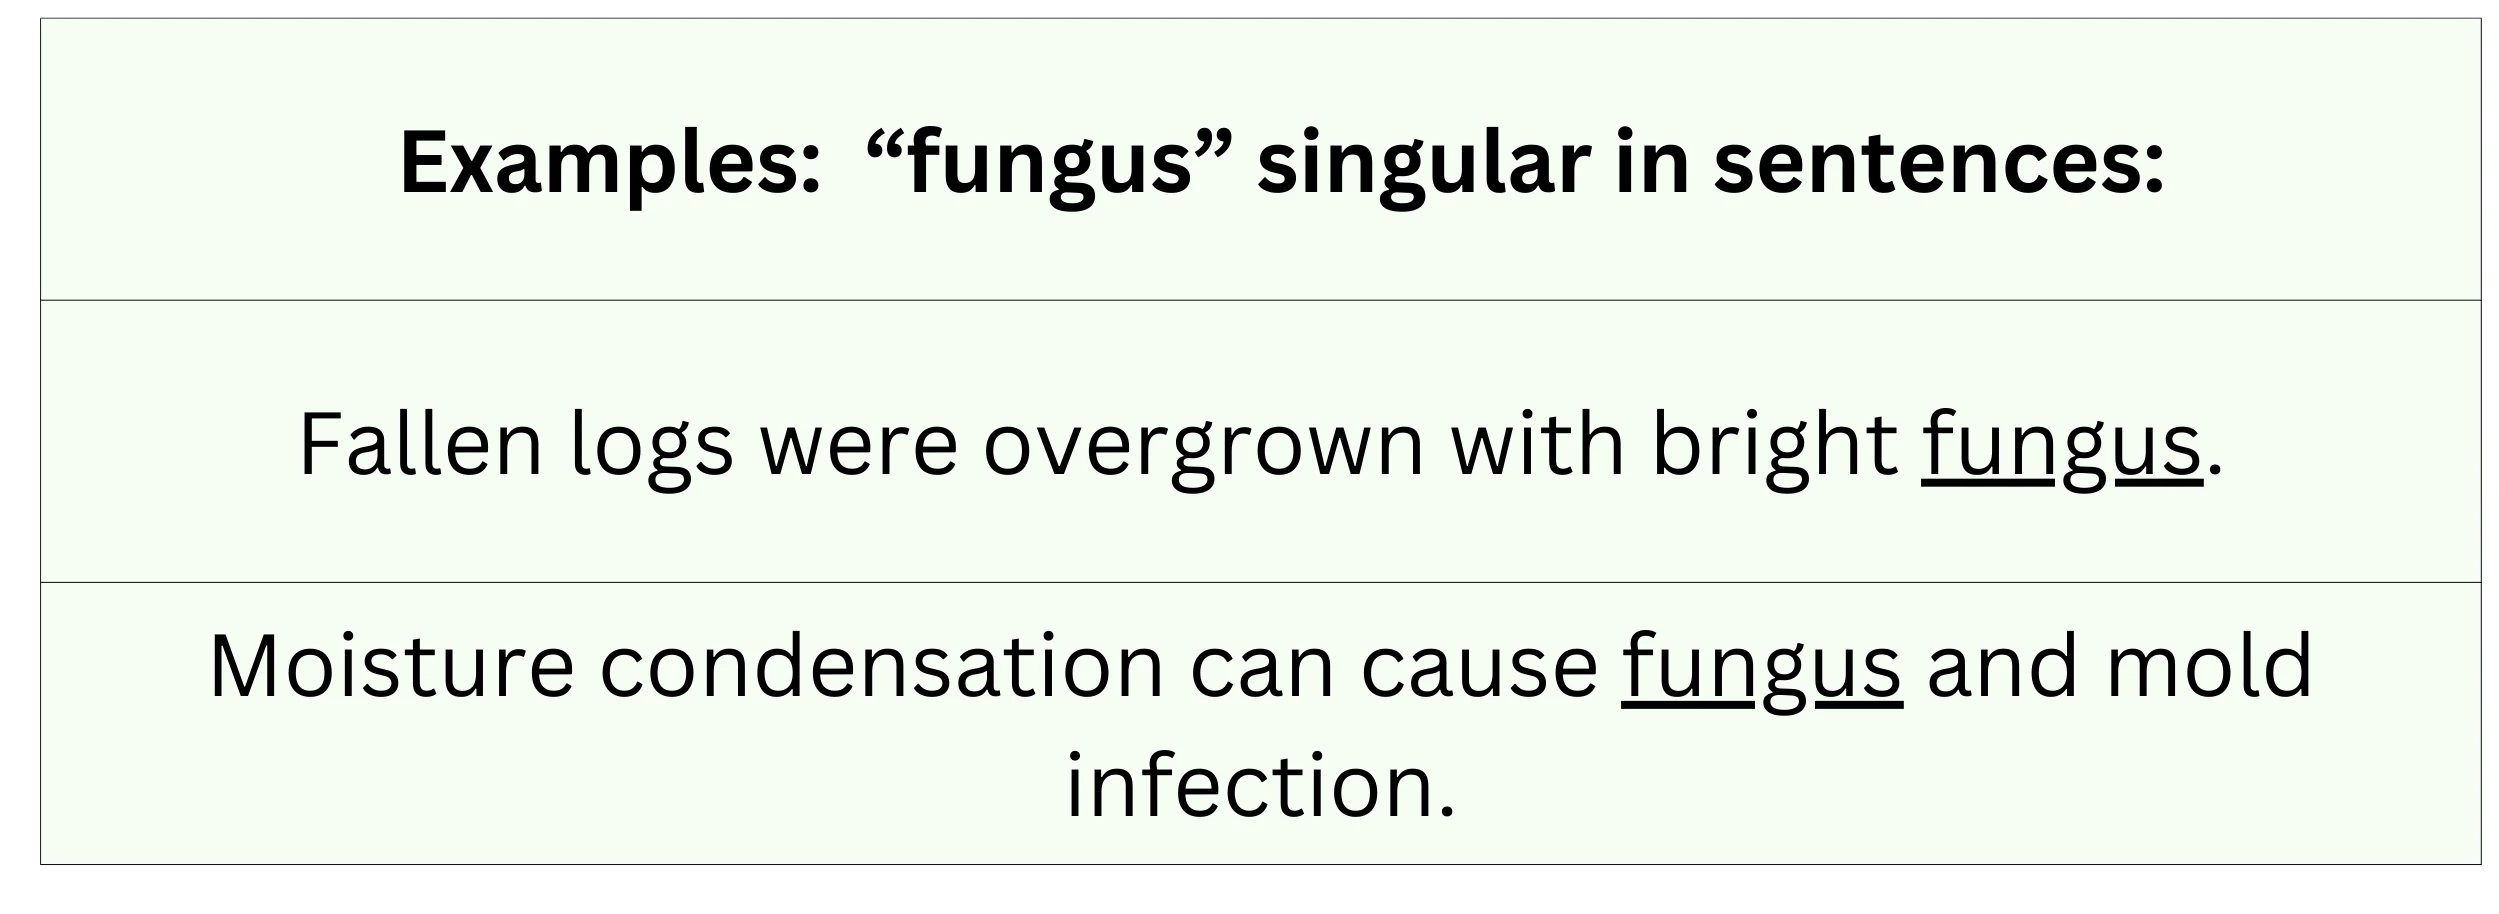 "Fungus" singular in sentence examples.